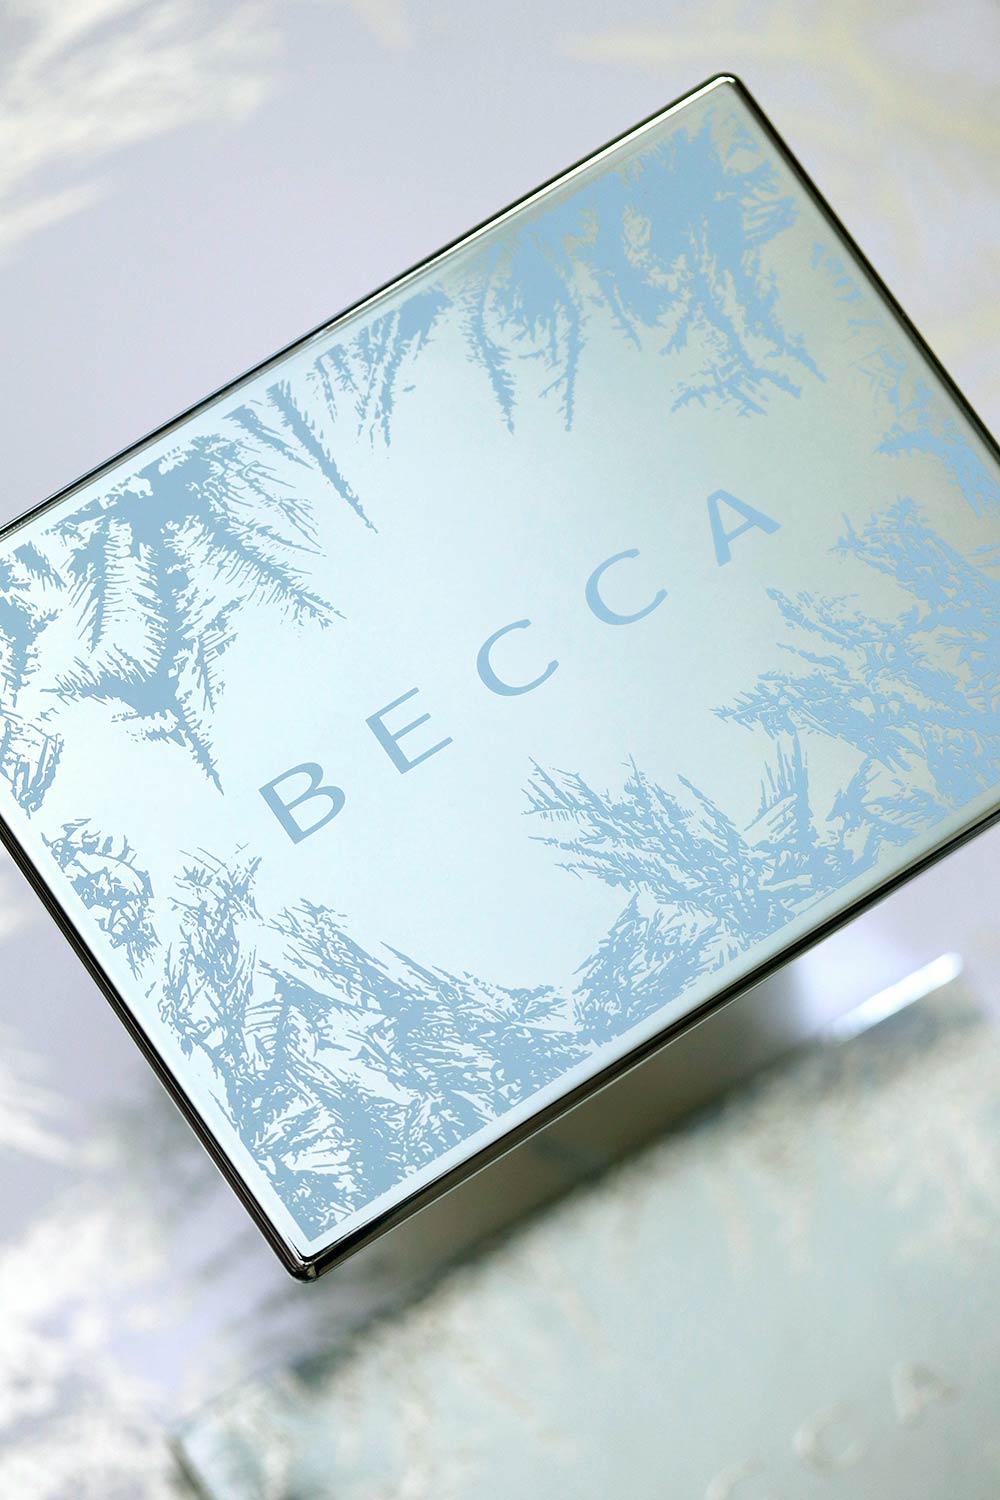 becca apres ski glow face palette packaging